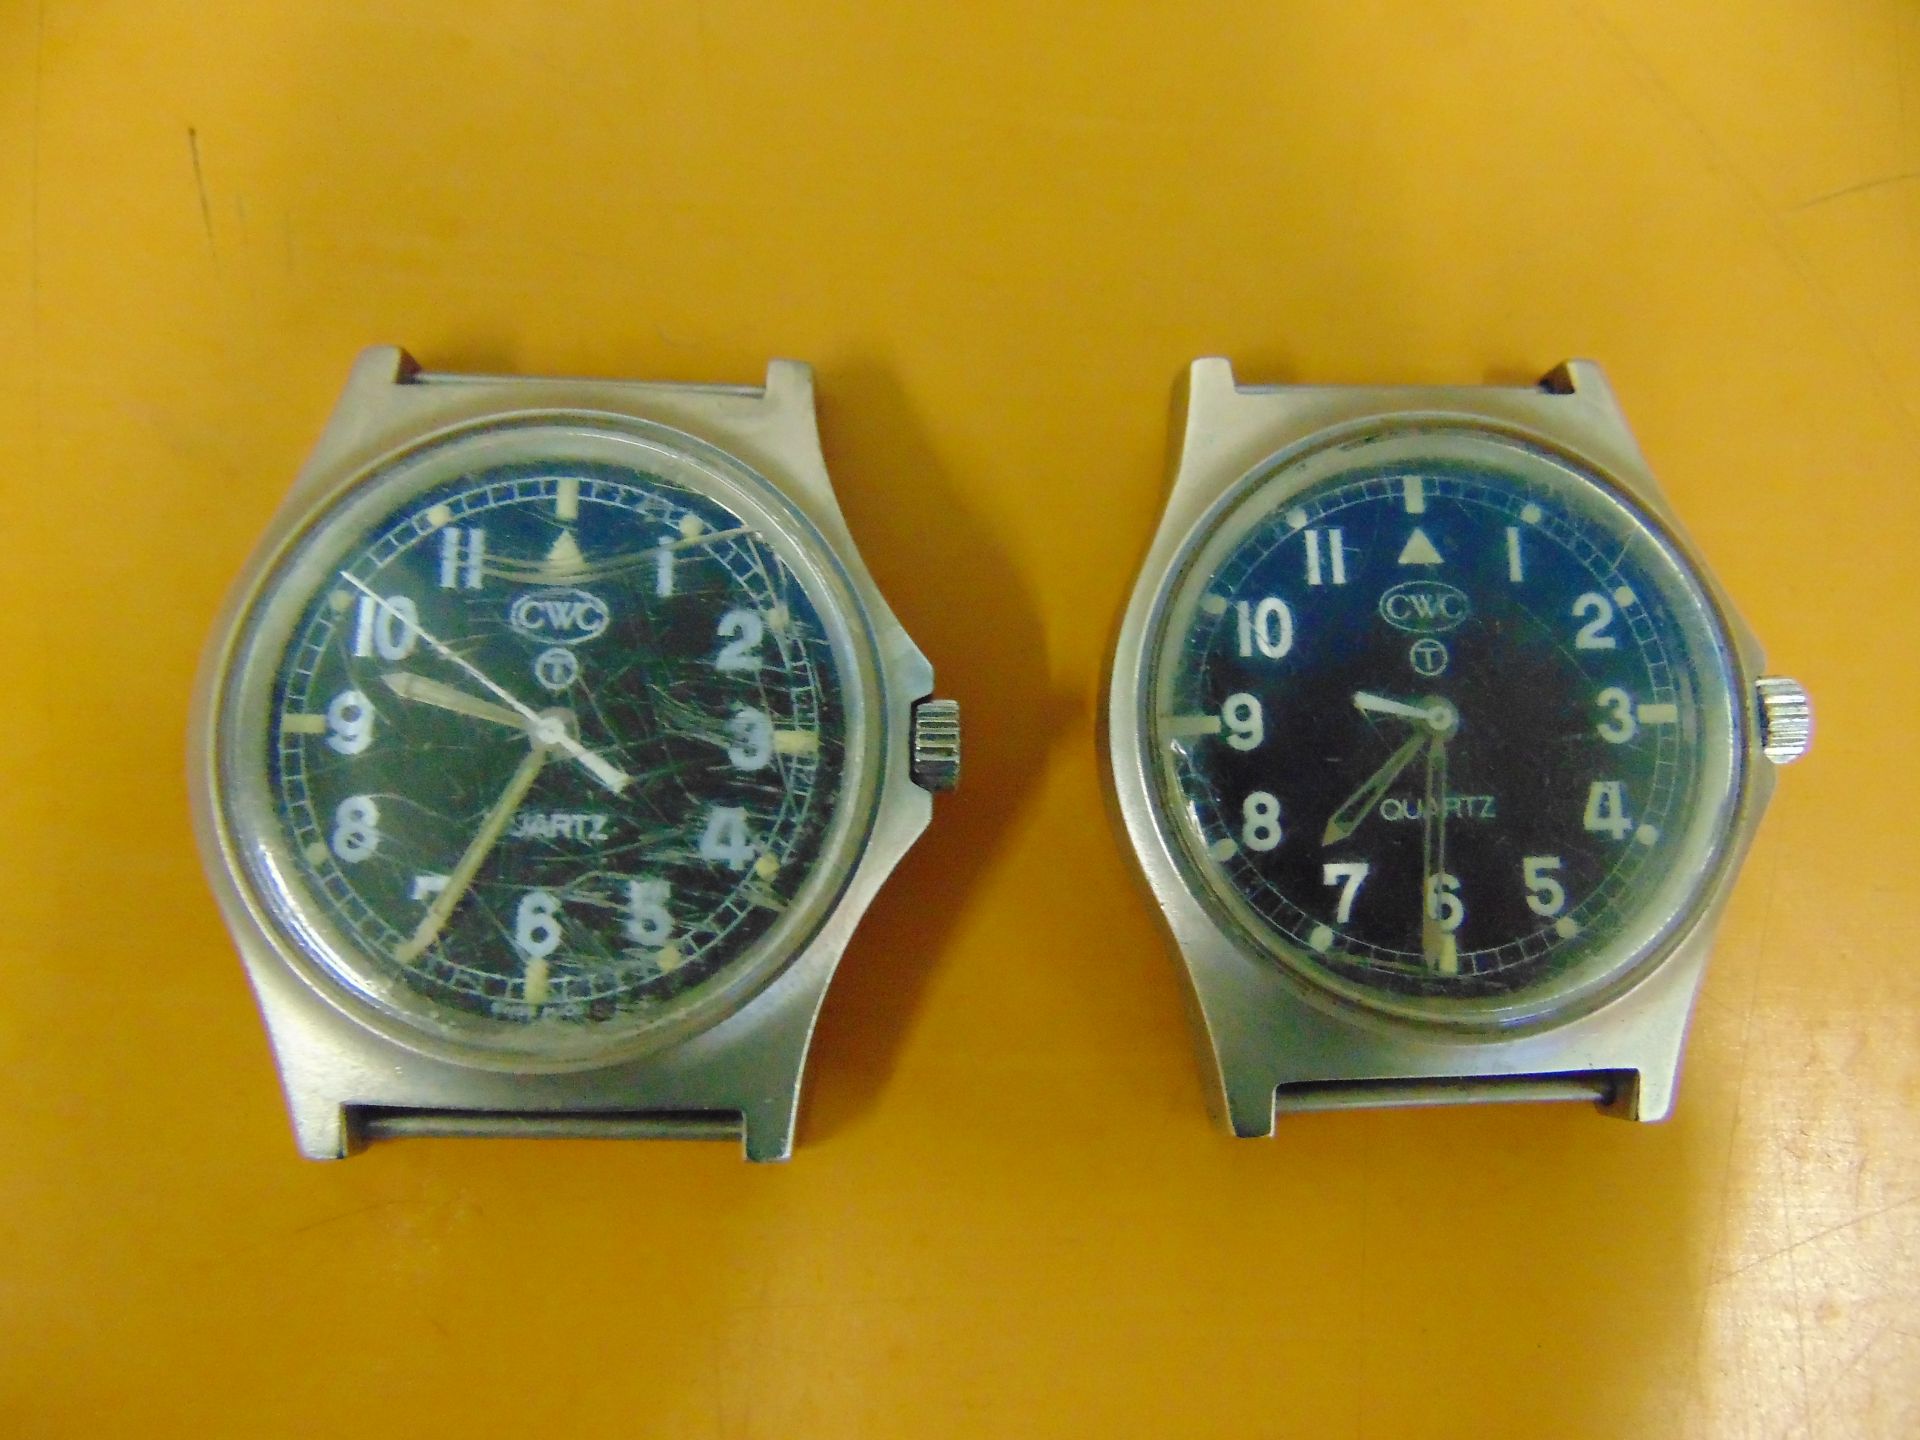 2 x CWC Wrist Watches